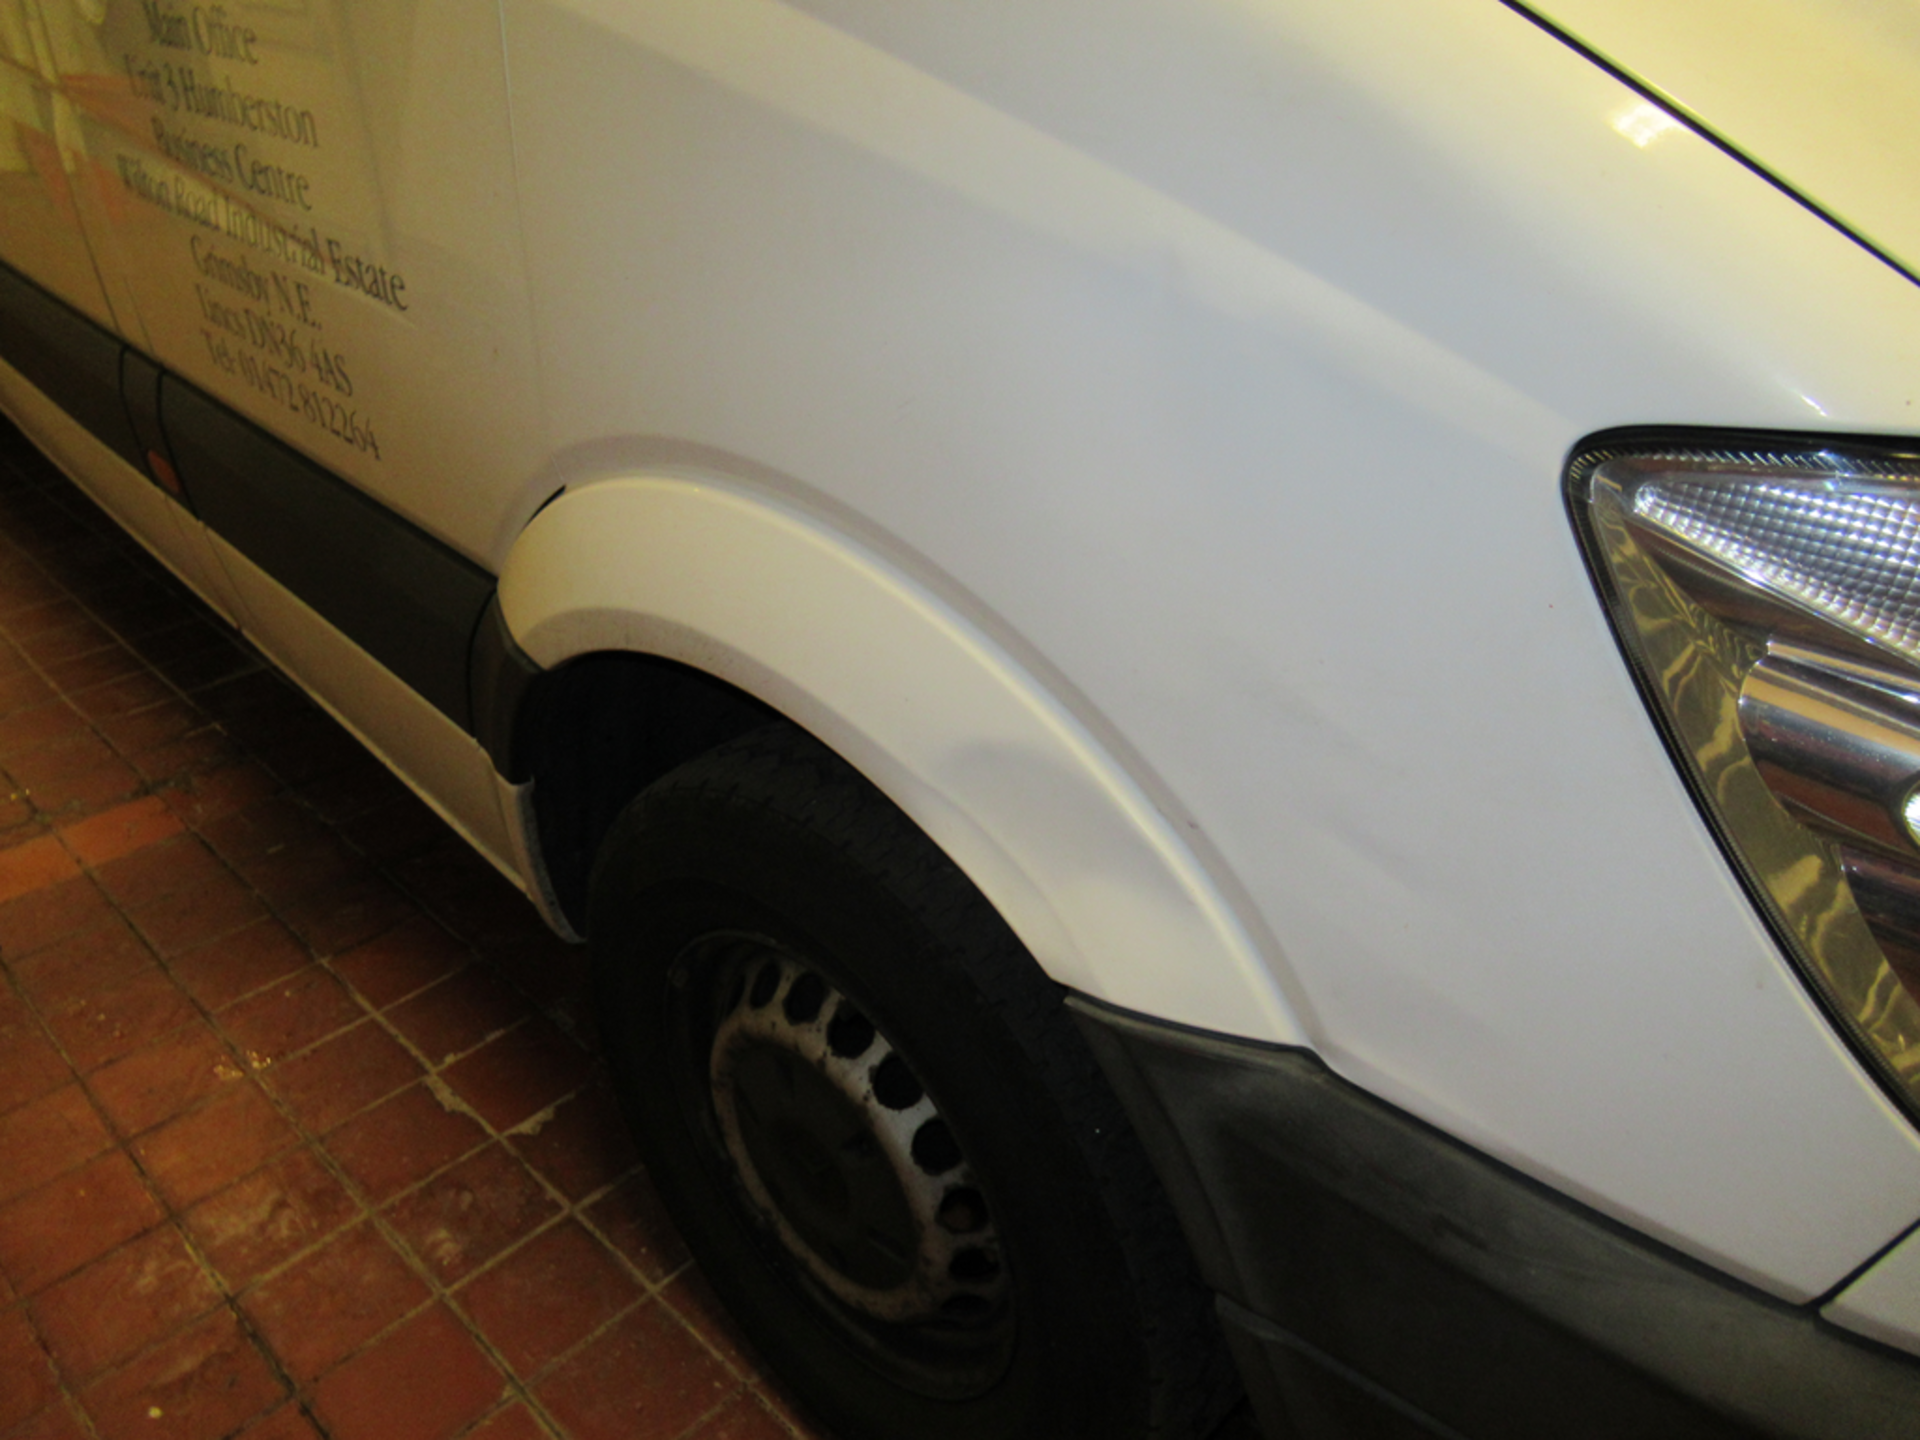 A 2013 Mercedes Sprinter 313 CDI Refrigerated VAN - Image 7 of 20